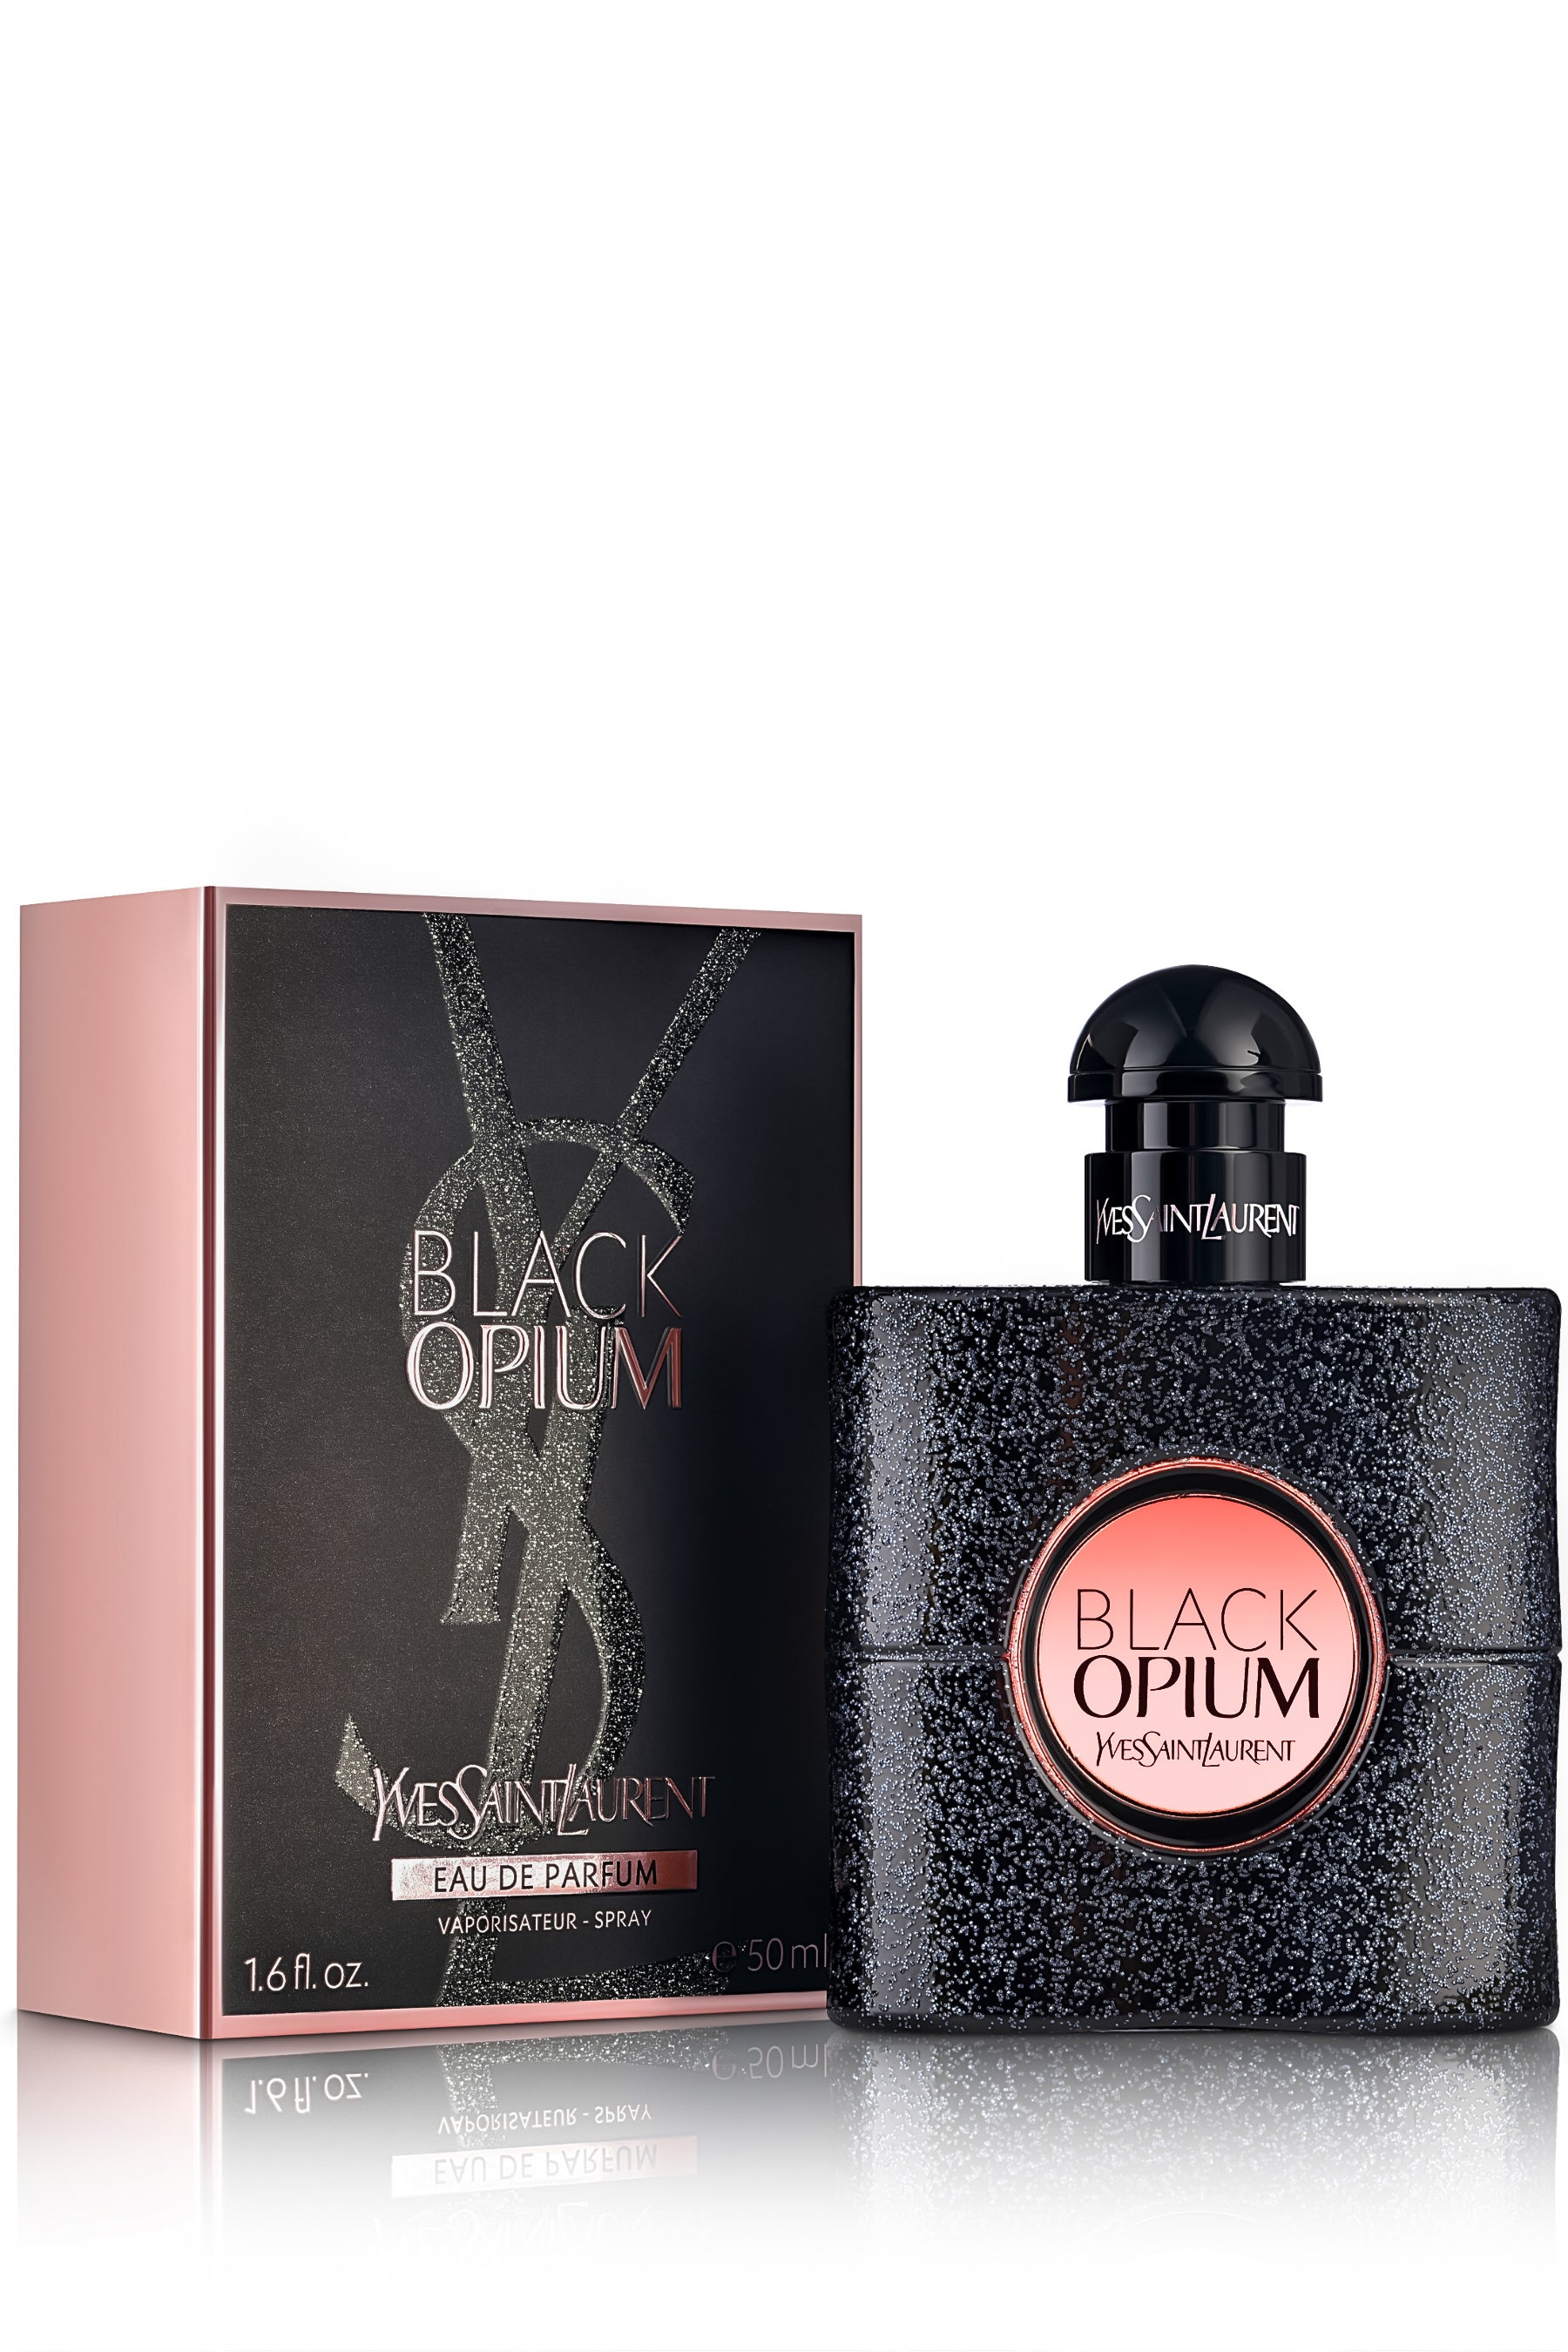 kasseapparat brud at klemme Yves Saint Laurent | Black Opium Perfume | REBL Scents